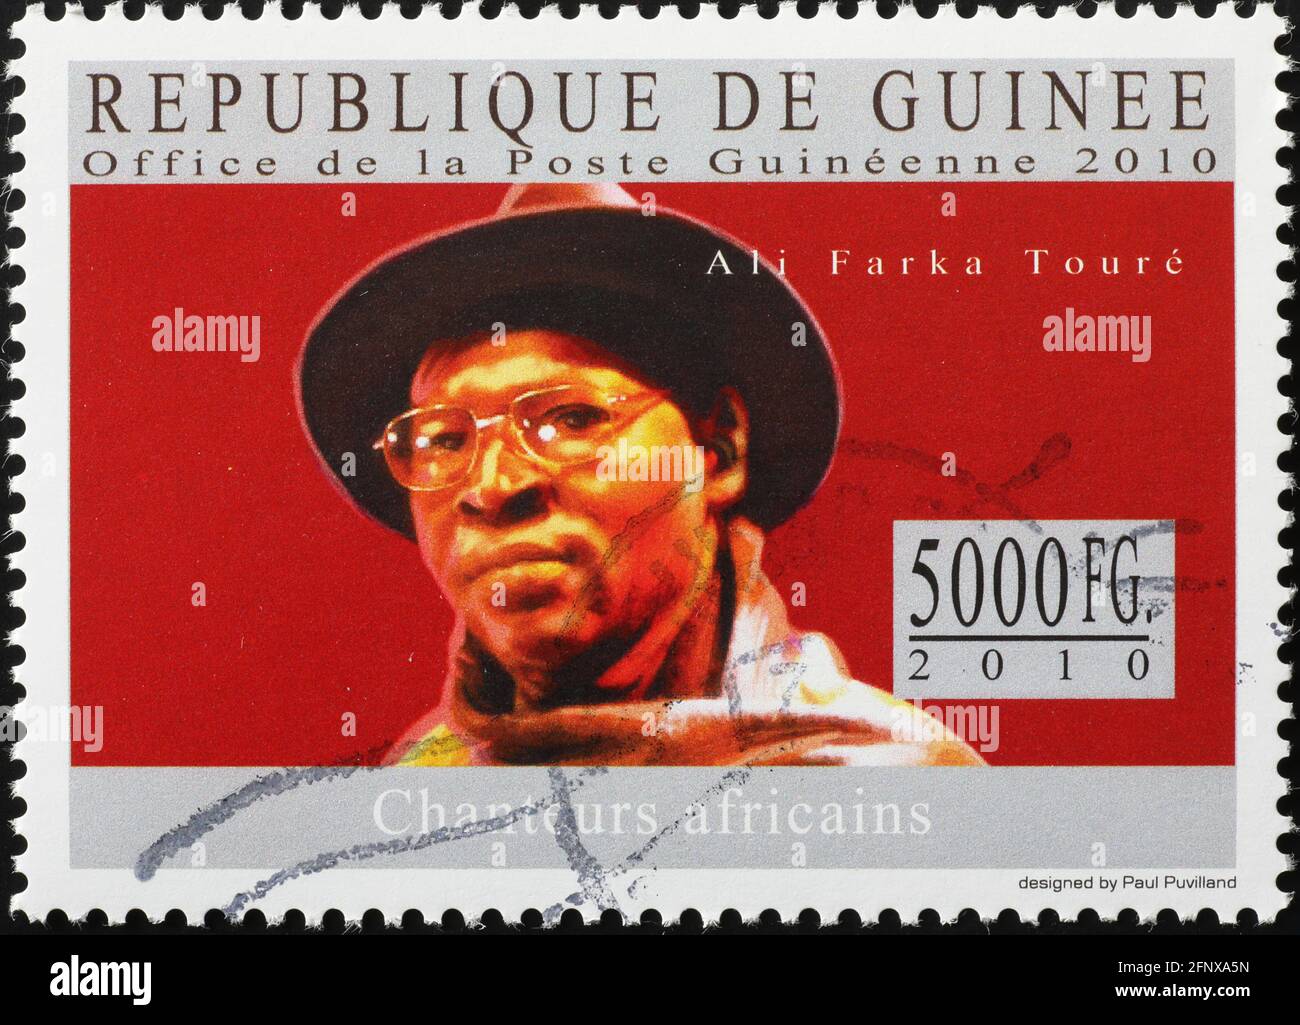 Ali Farka Touré portrait on stamp of Guinea Stock Photo